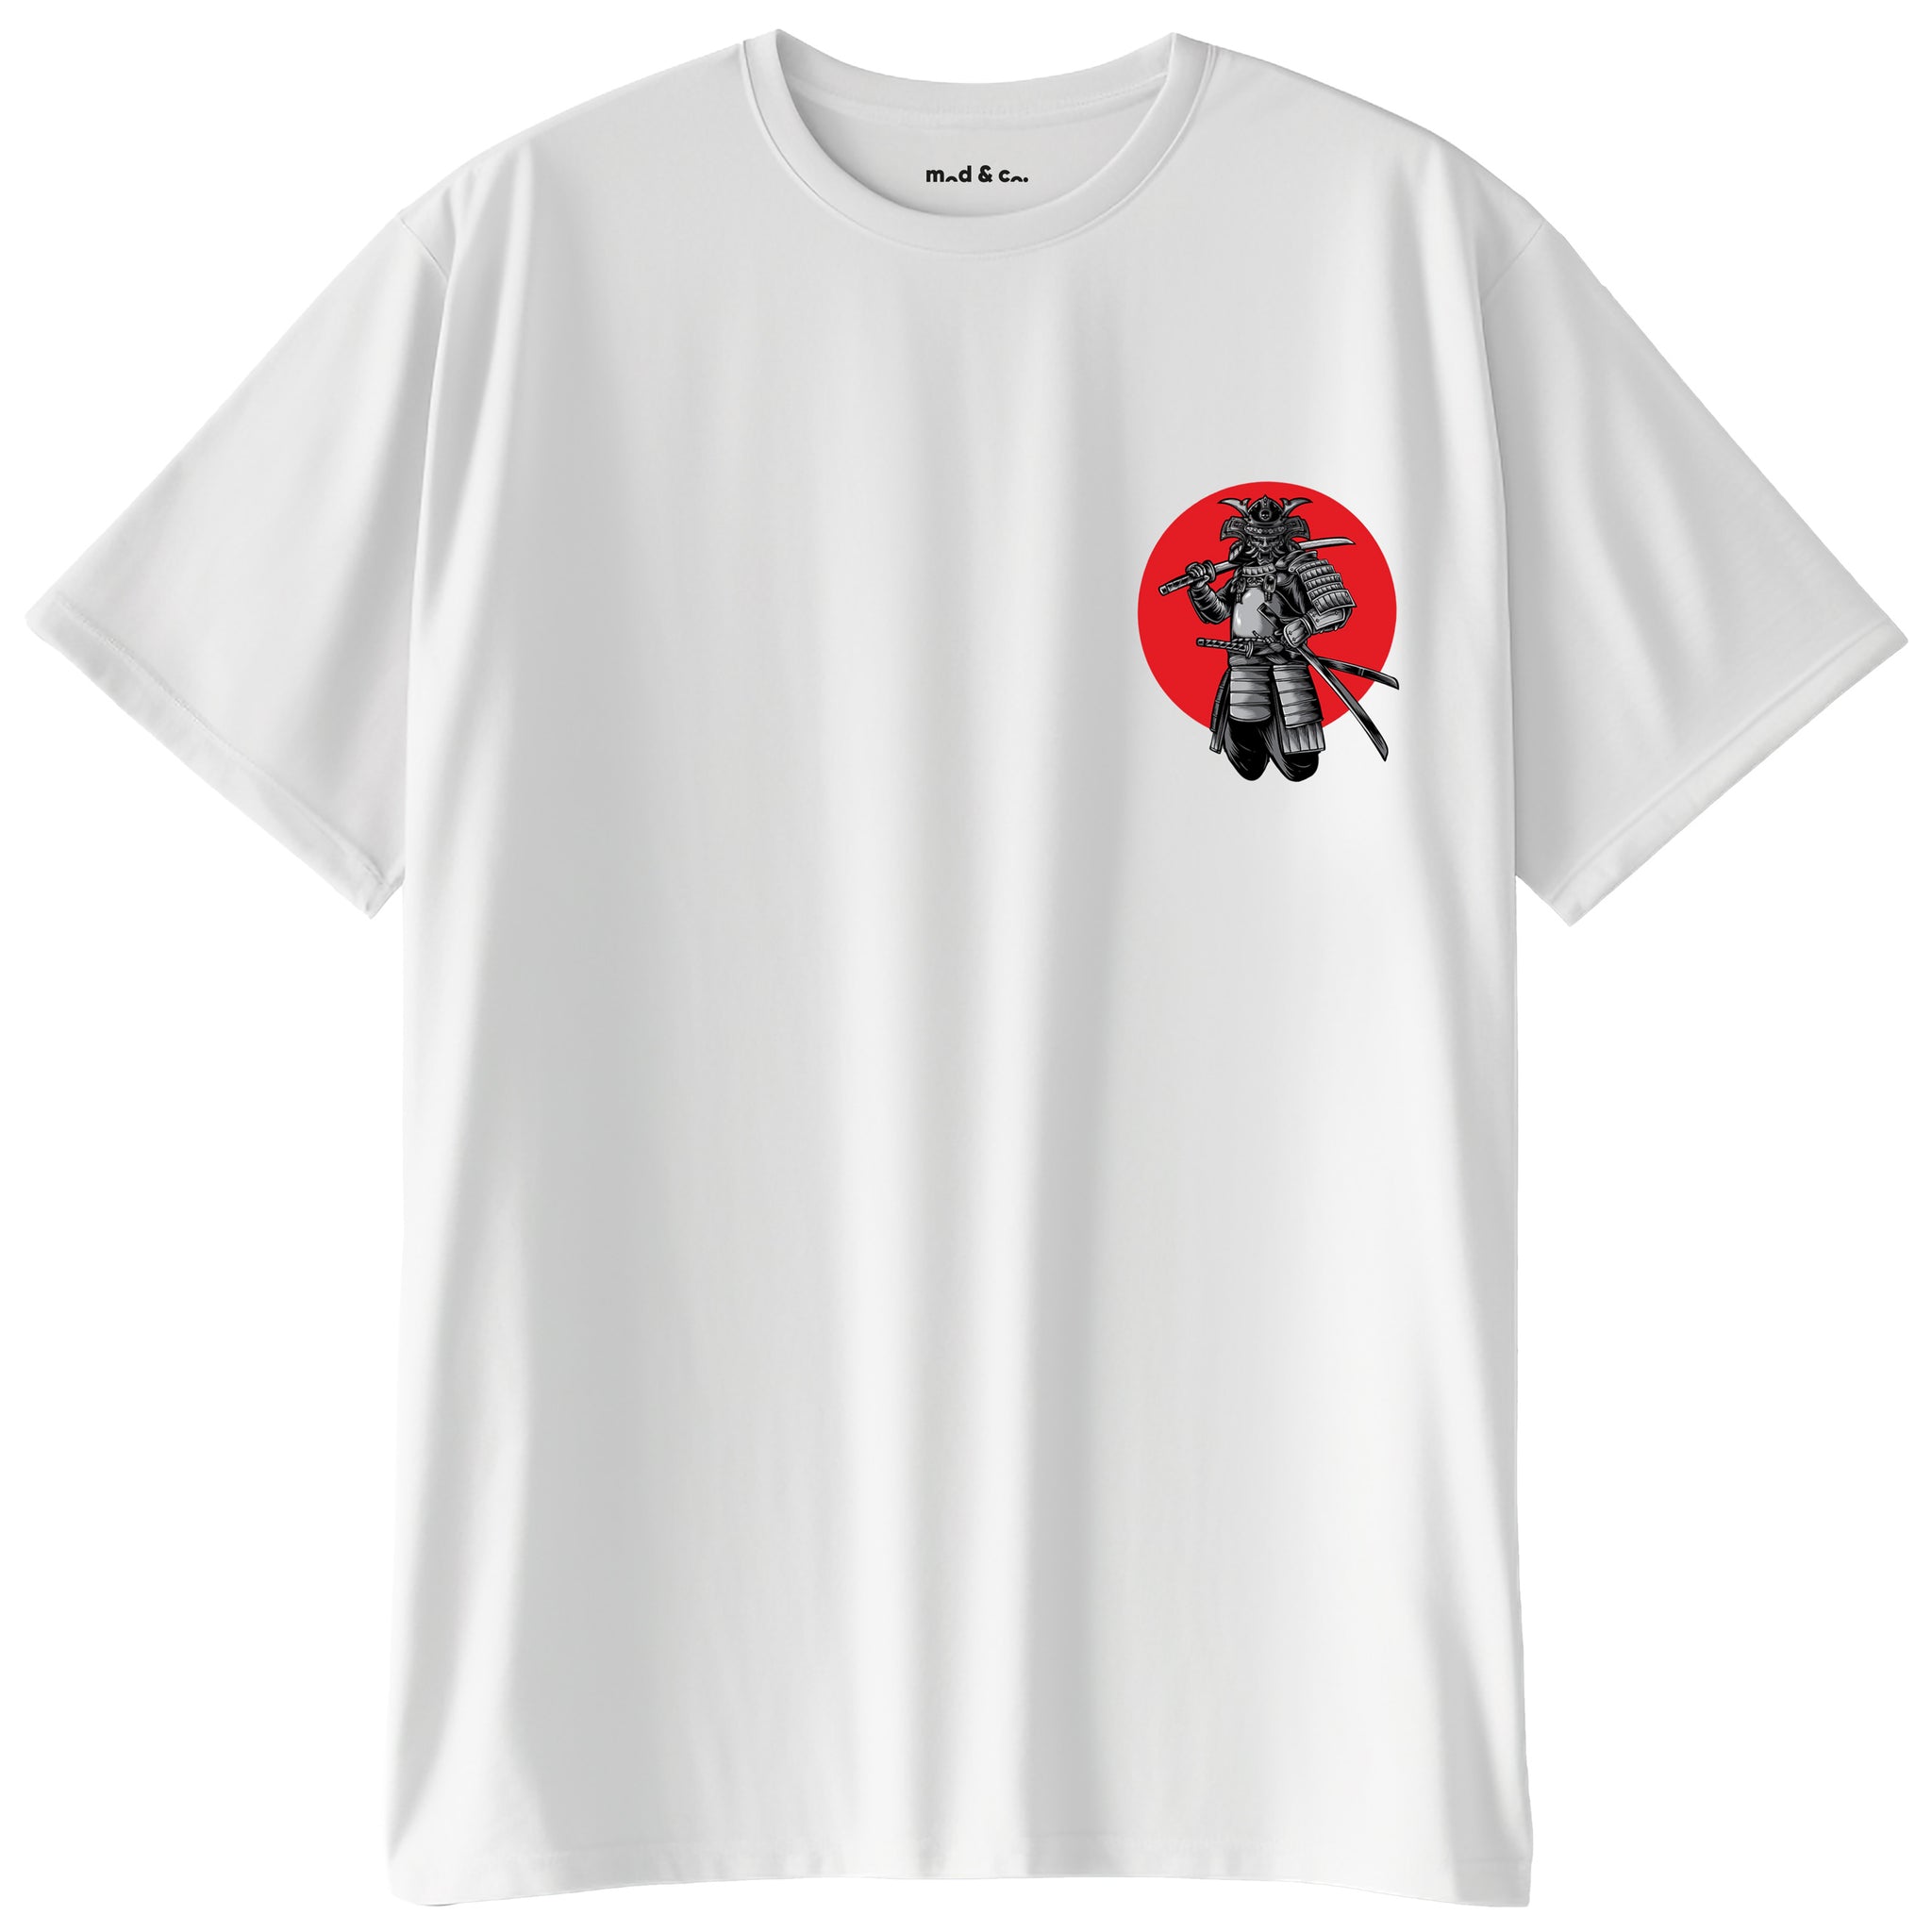 Samurai Warrior Oversize T-Shirt